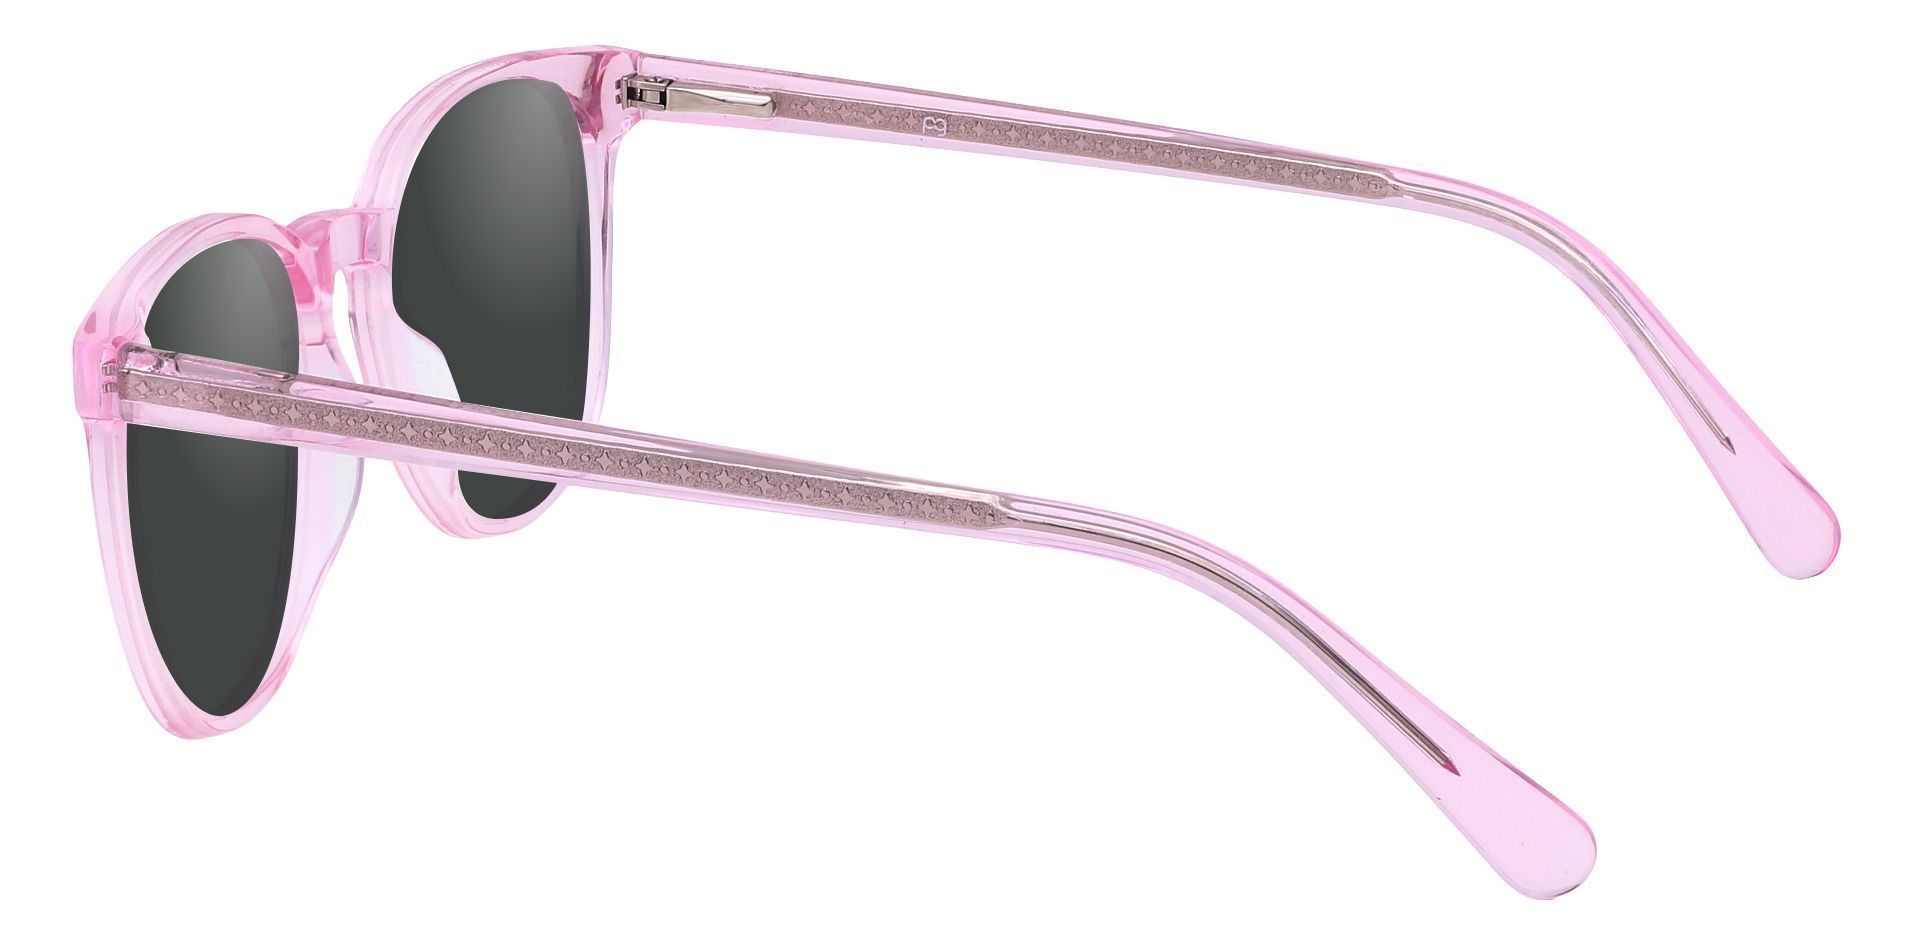 Nebula Round Prescription Sunglasses - Pink Frame With Gray Lenses